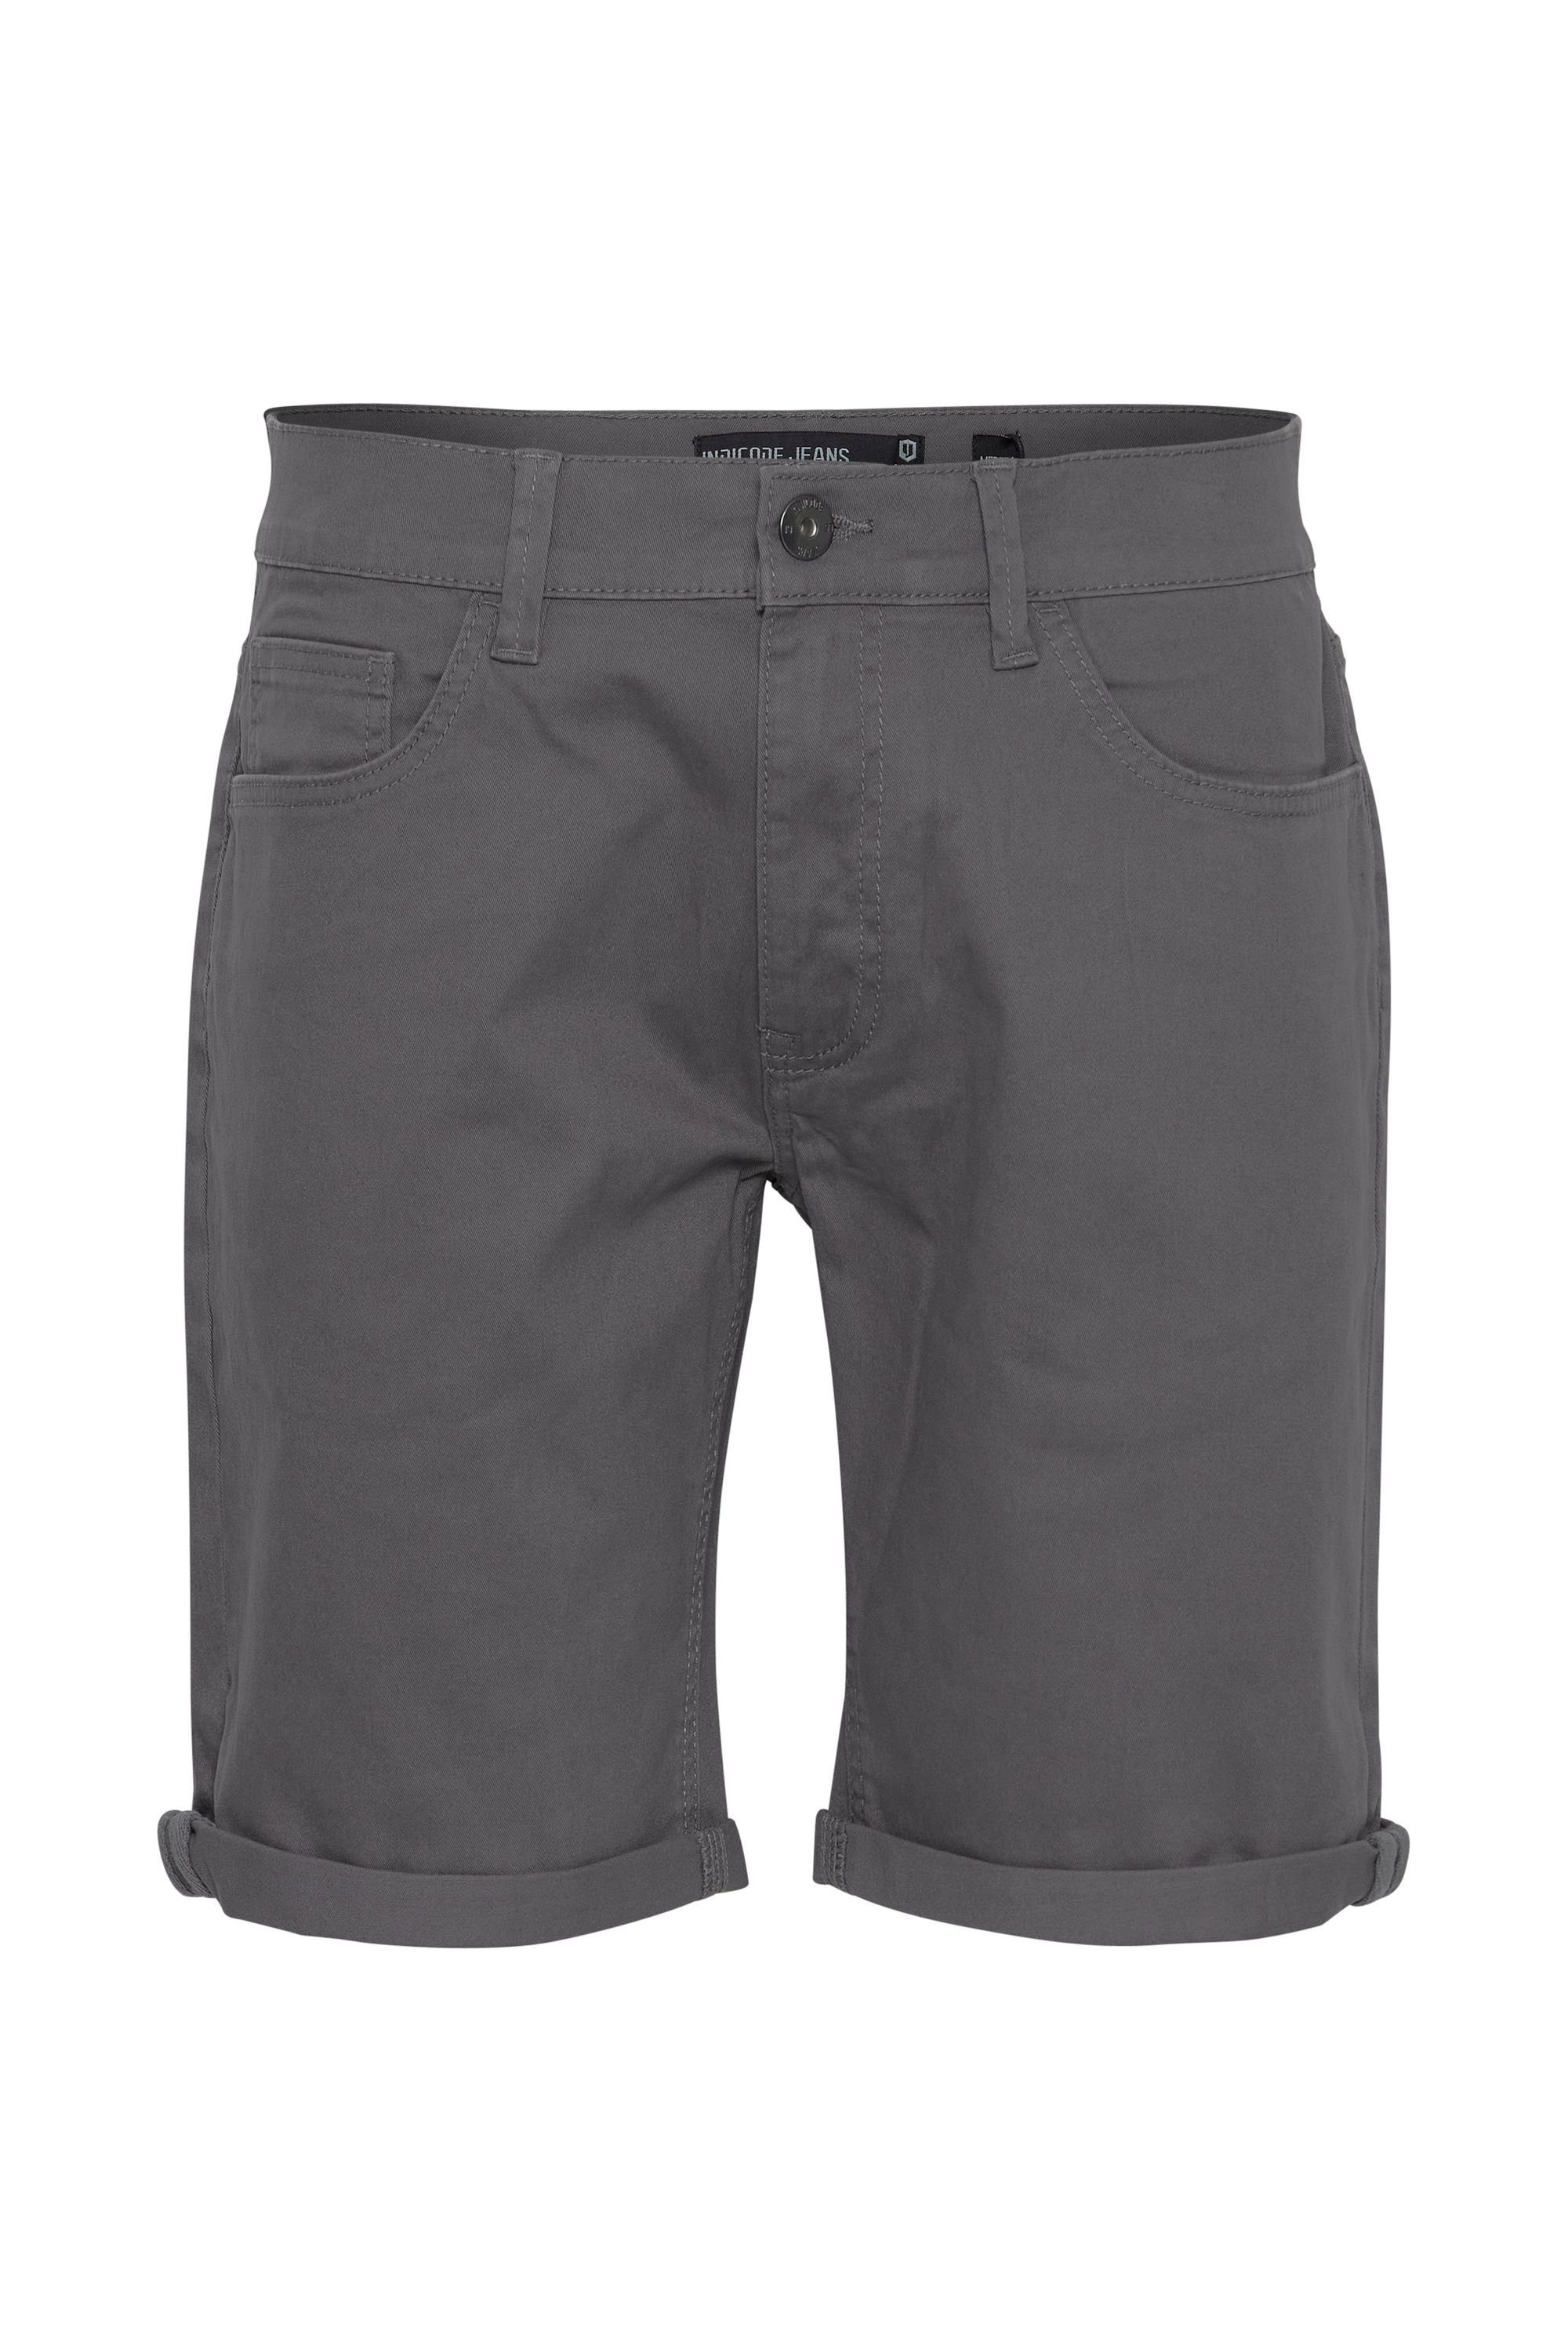 (905) Indicode Shorts IDPokka Grey